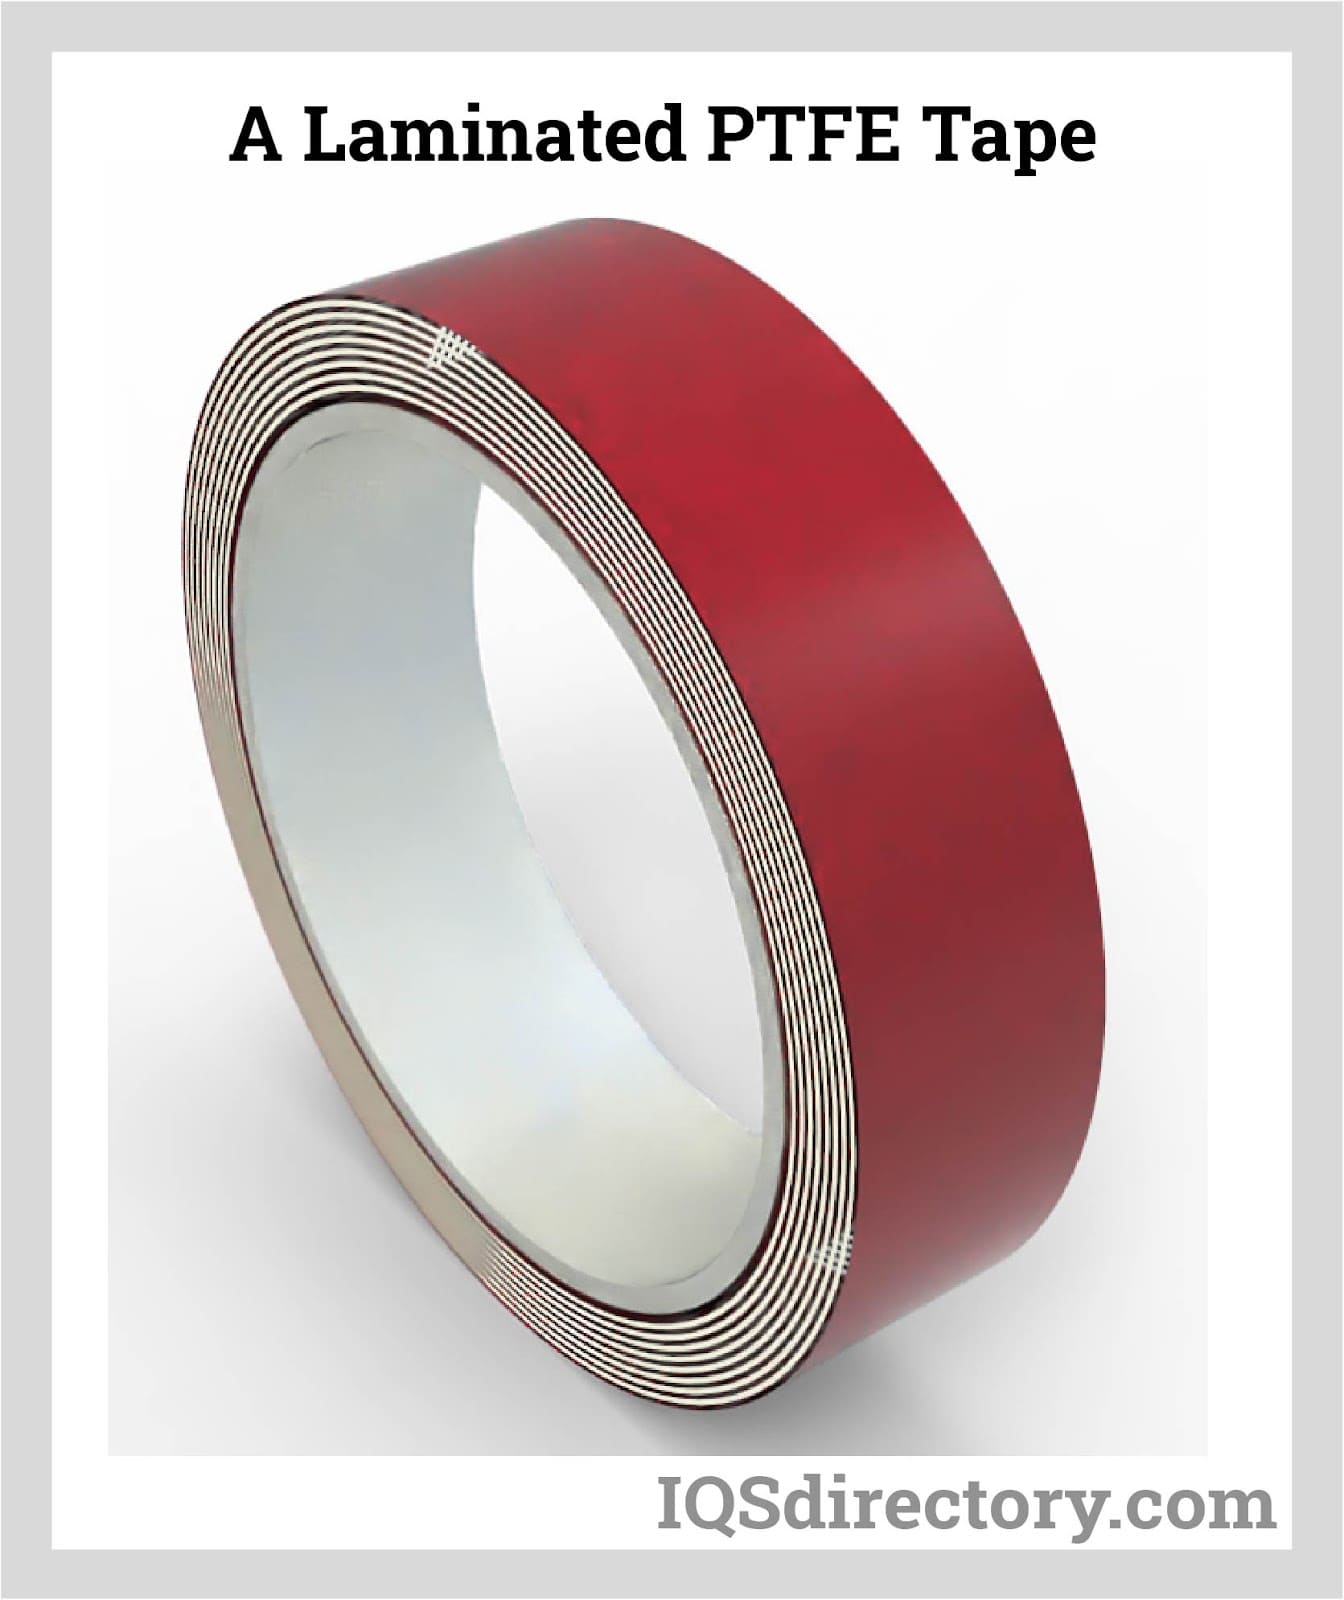 A Laminated PTFE Tape